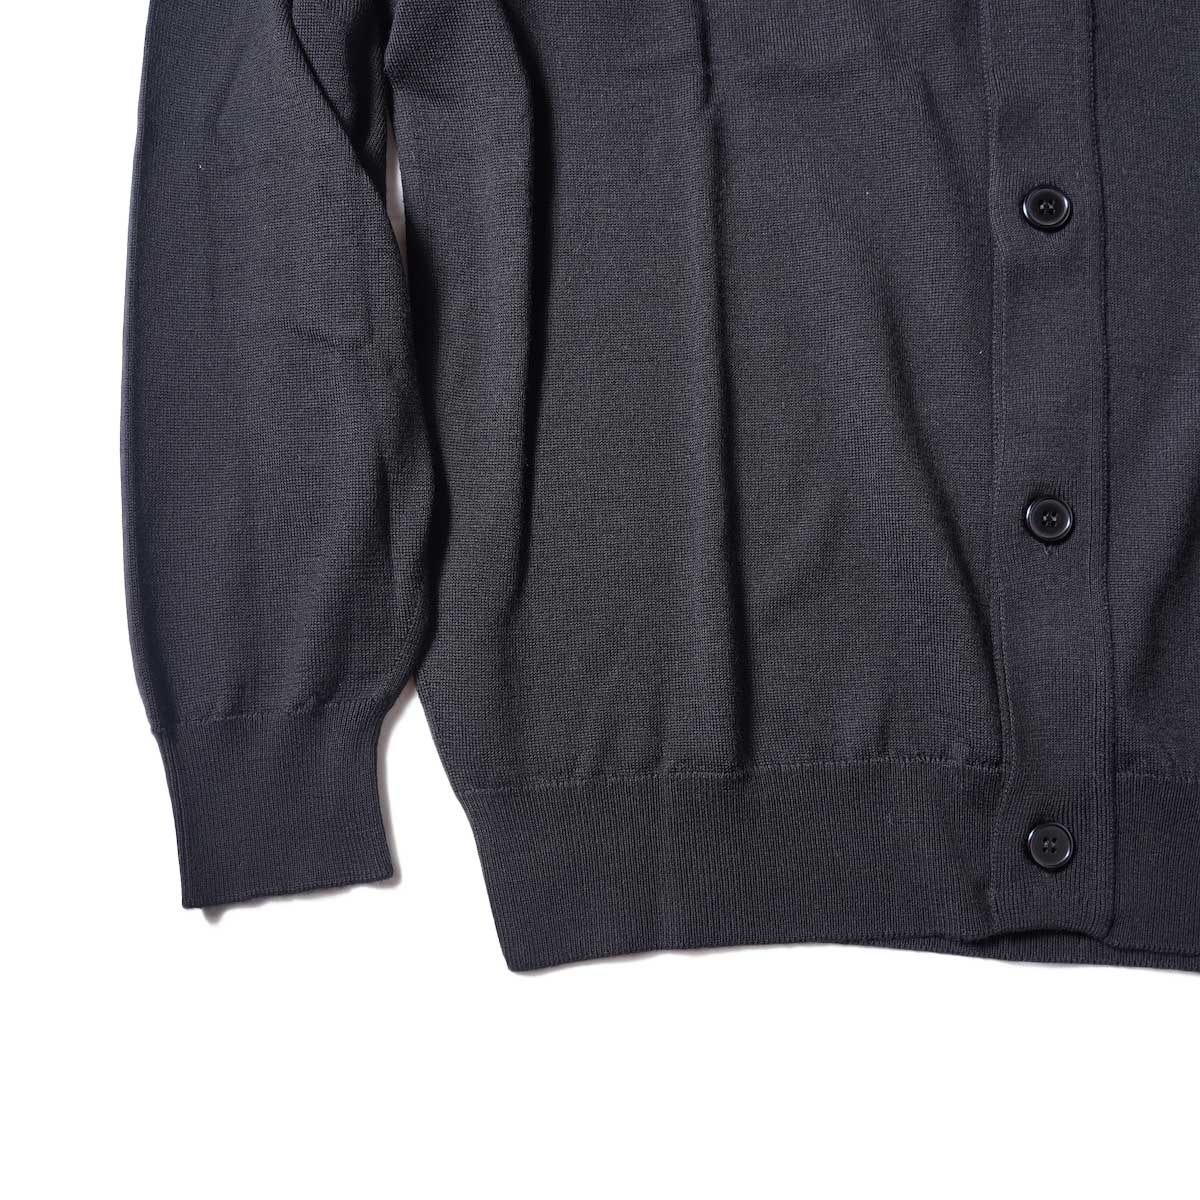 JOHN SMEDLEY / A4590 CARDIGAN VN LS (Black)裾、袖